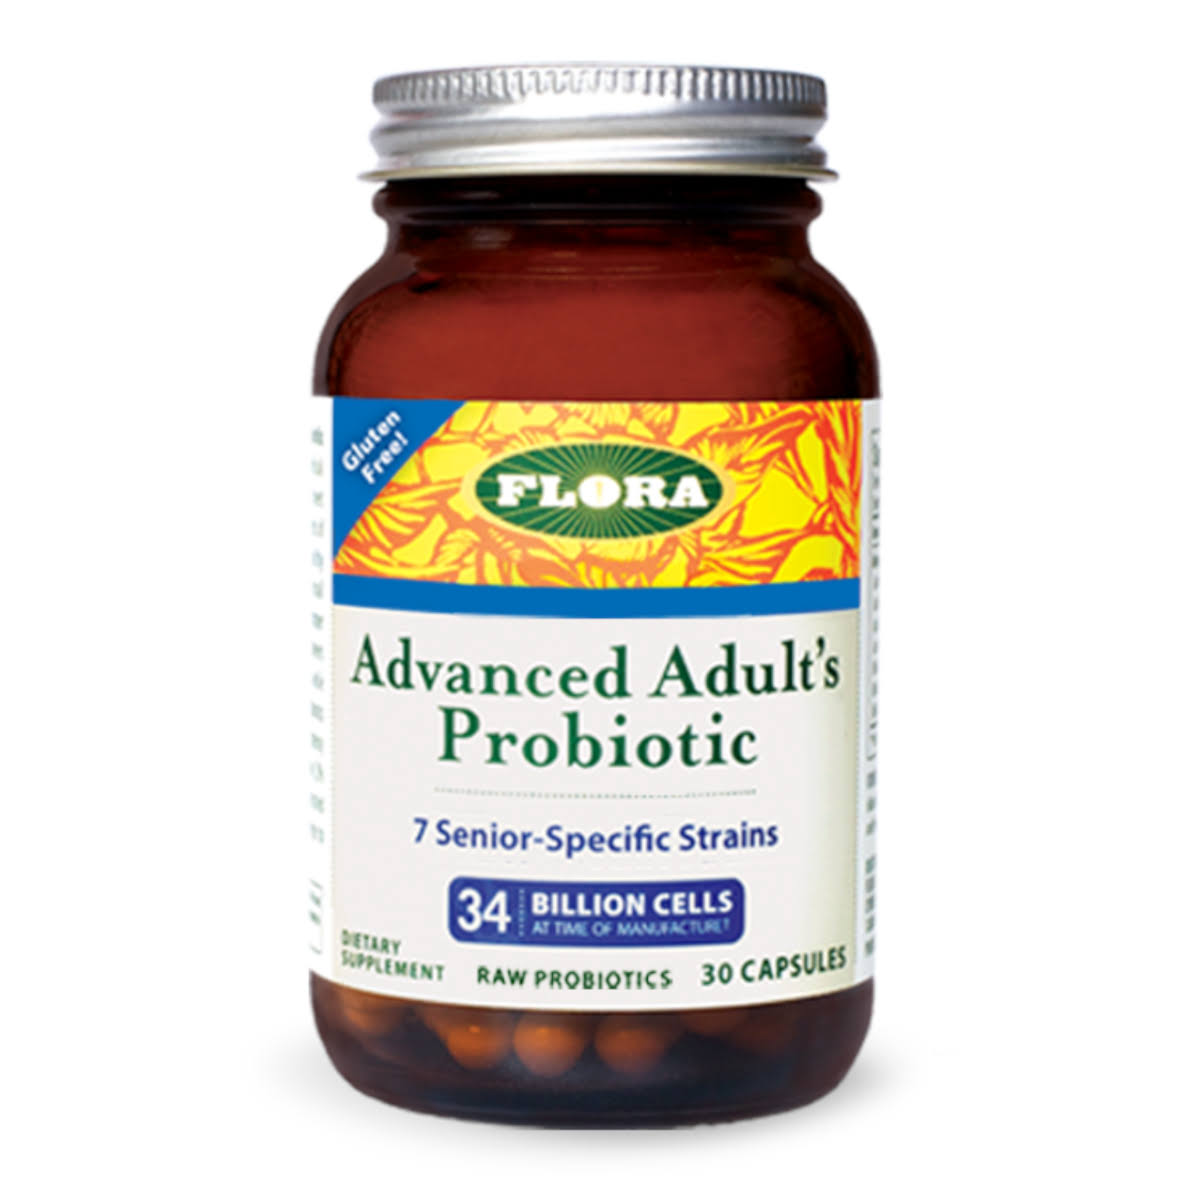 Flora Udo's Choice Advanced Adult's Probiotic